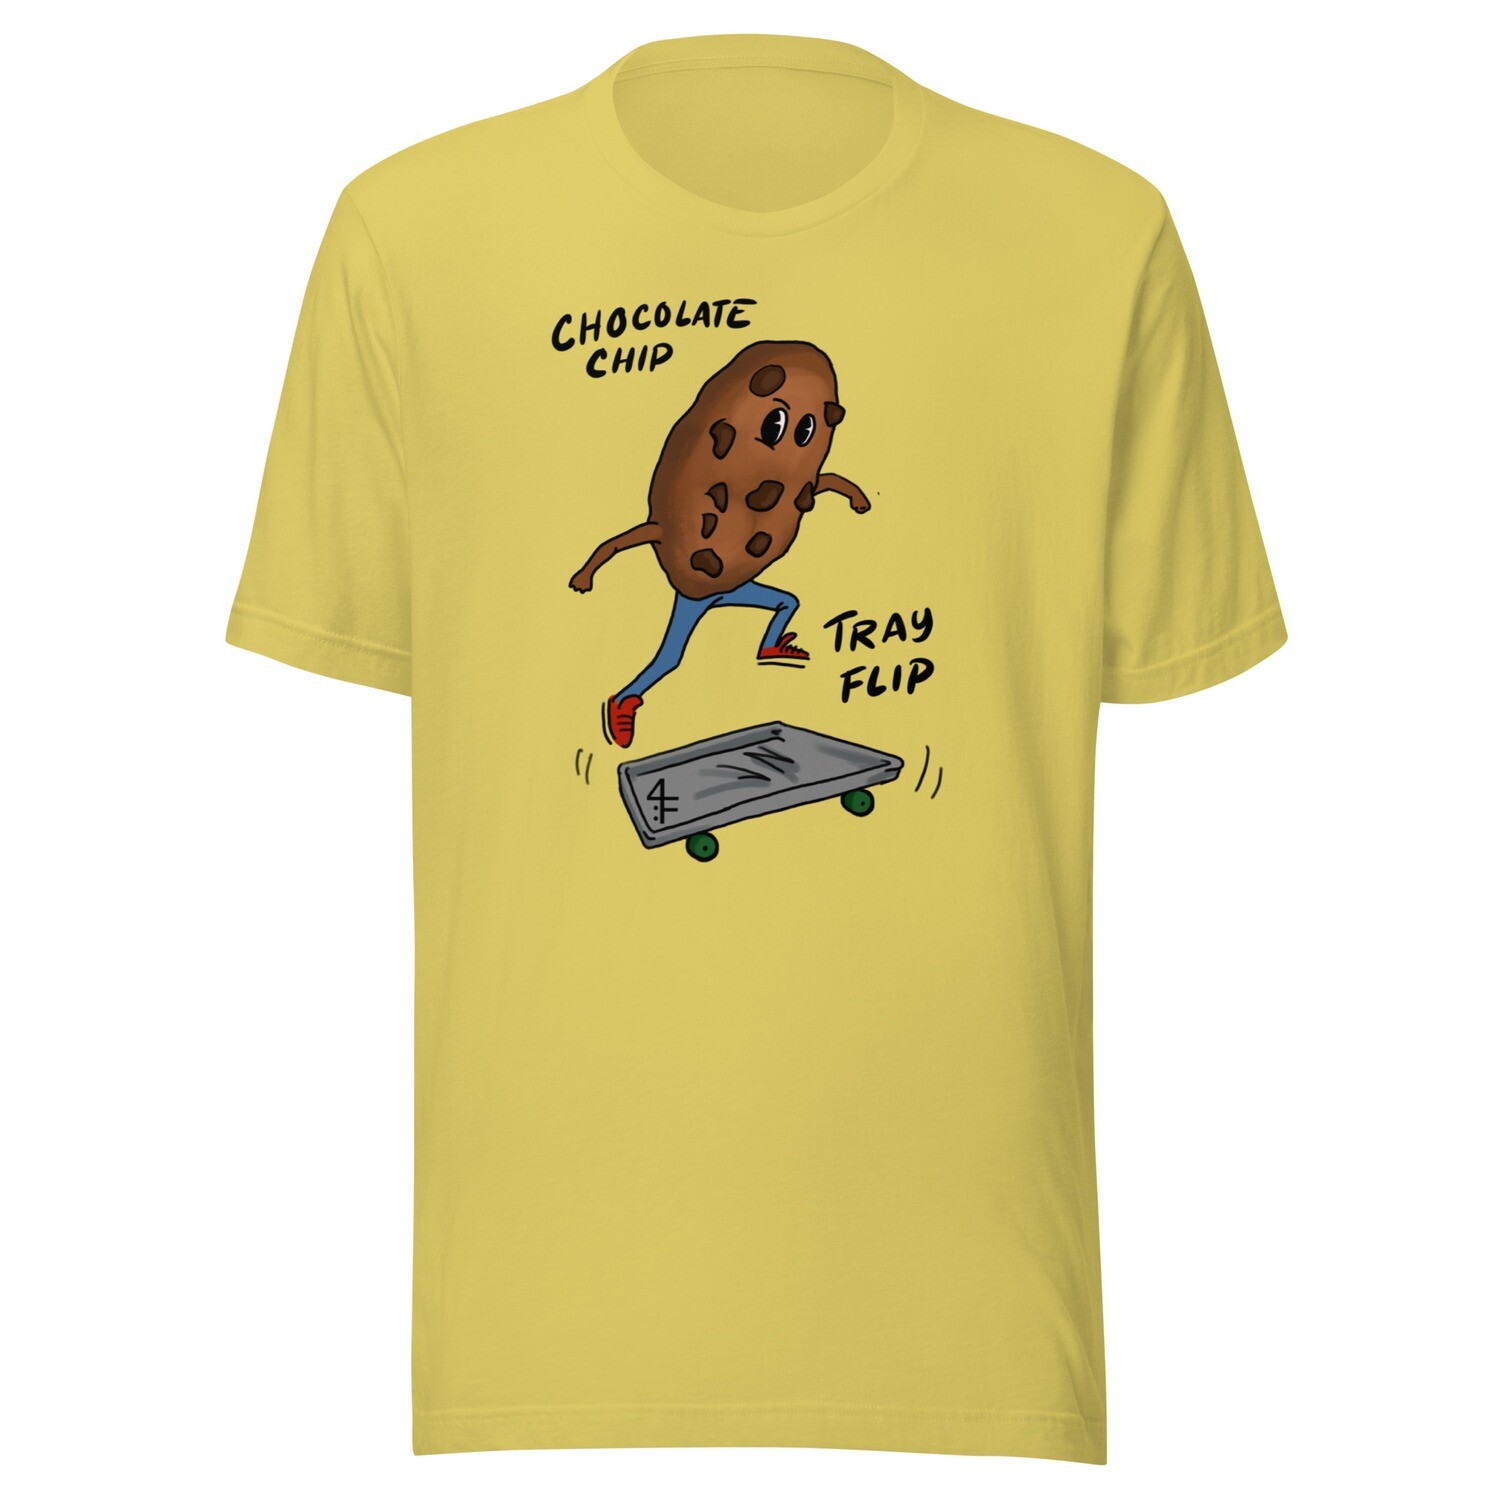 CHOCOLATE CHIP TRAY FLIP - Unisex t-shirt